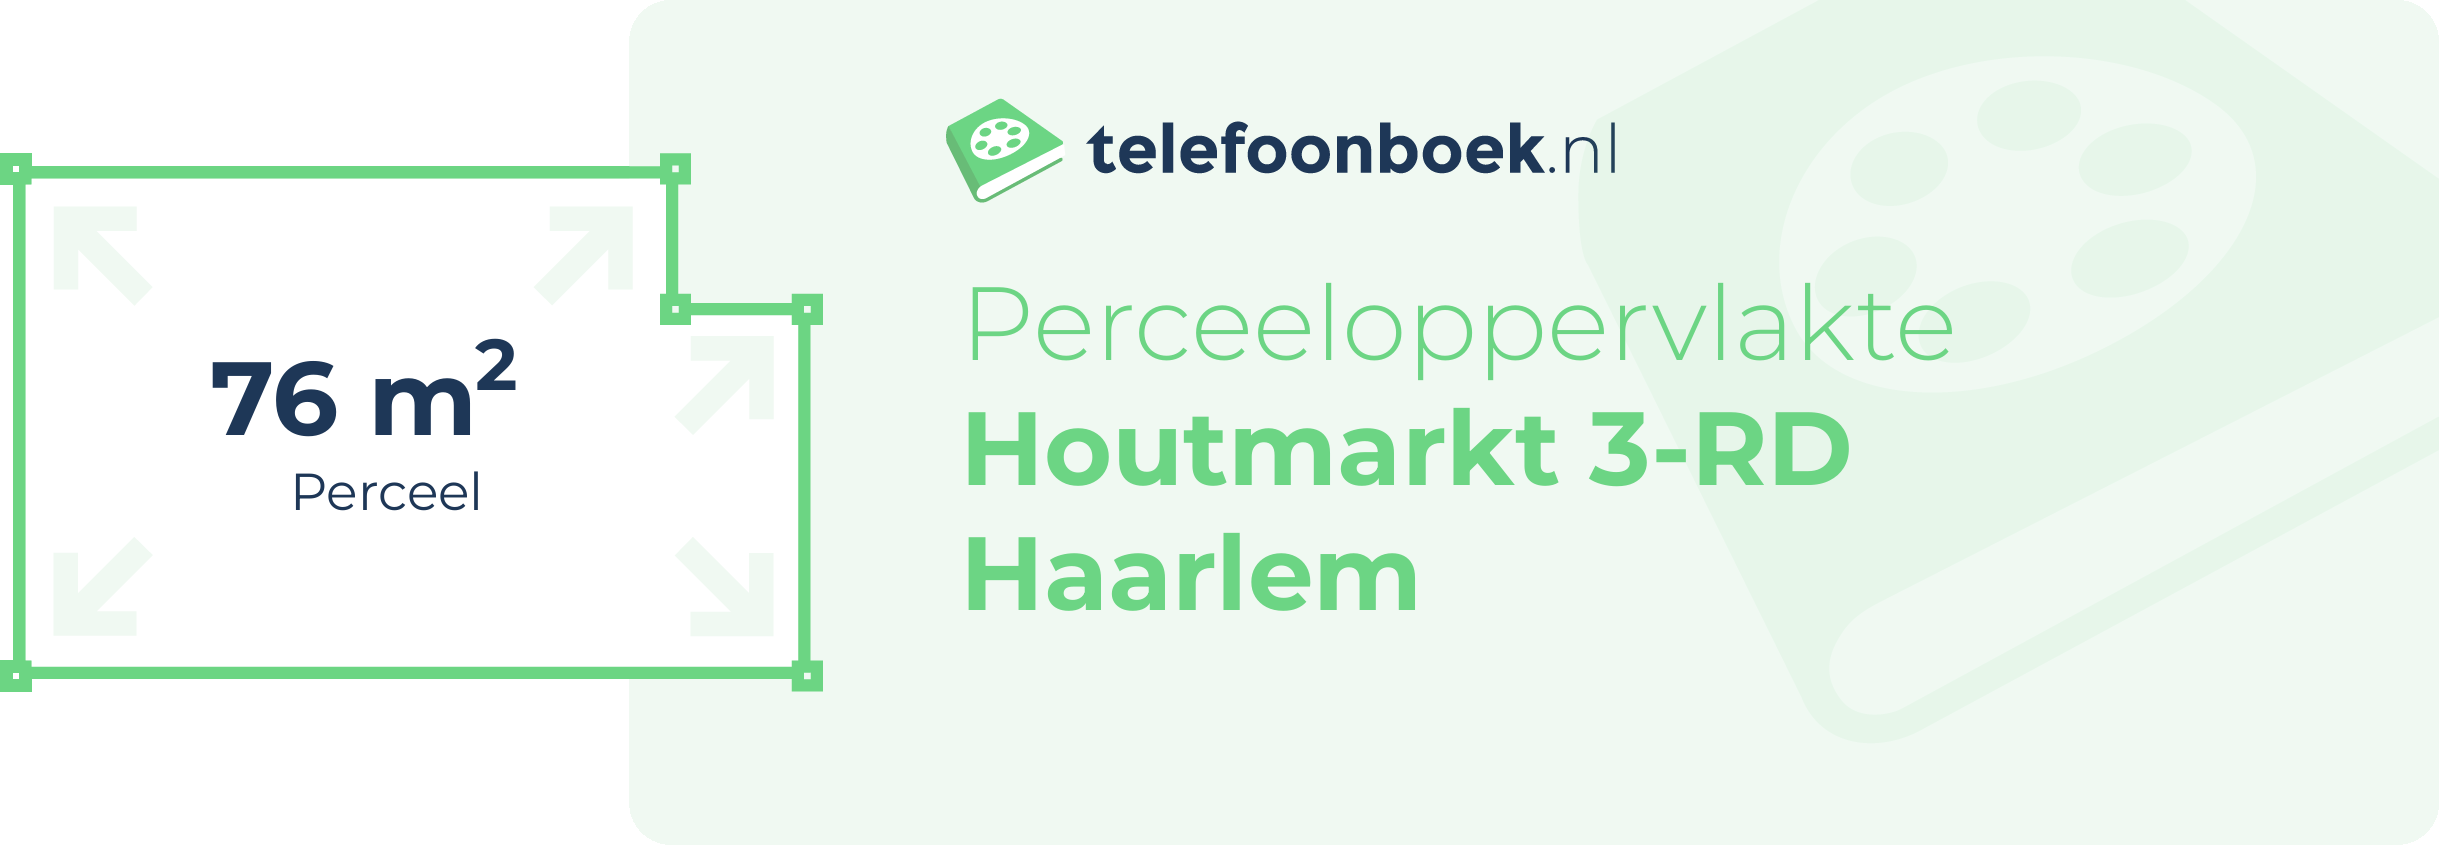 Perceeloppervlakte Houtmarkt 3-RD Haarlem